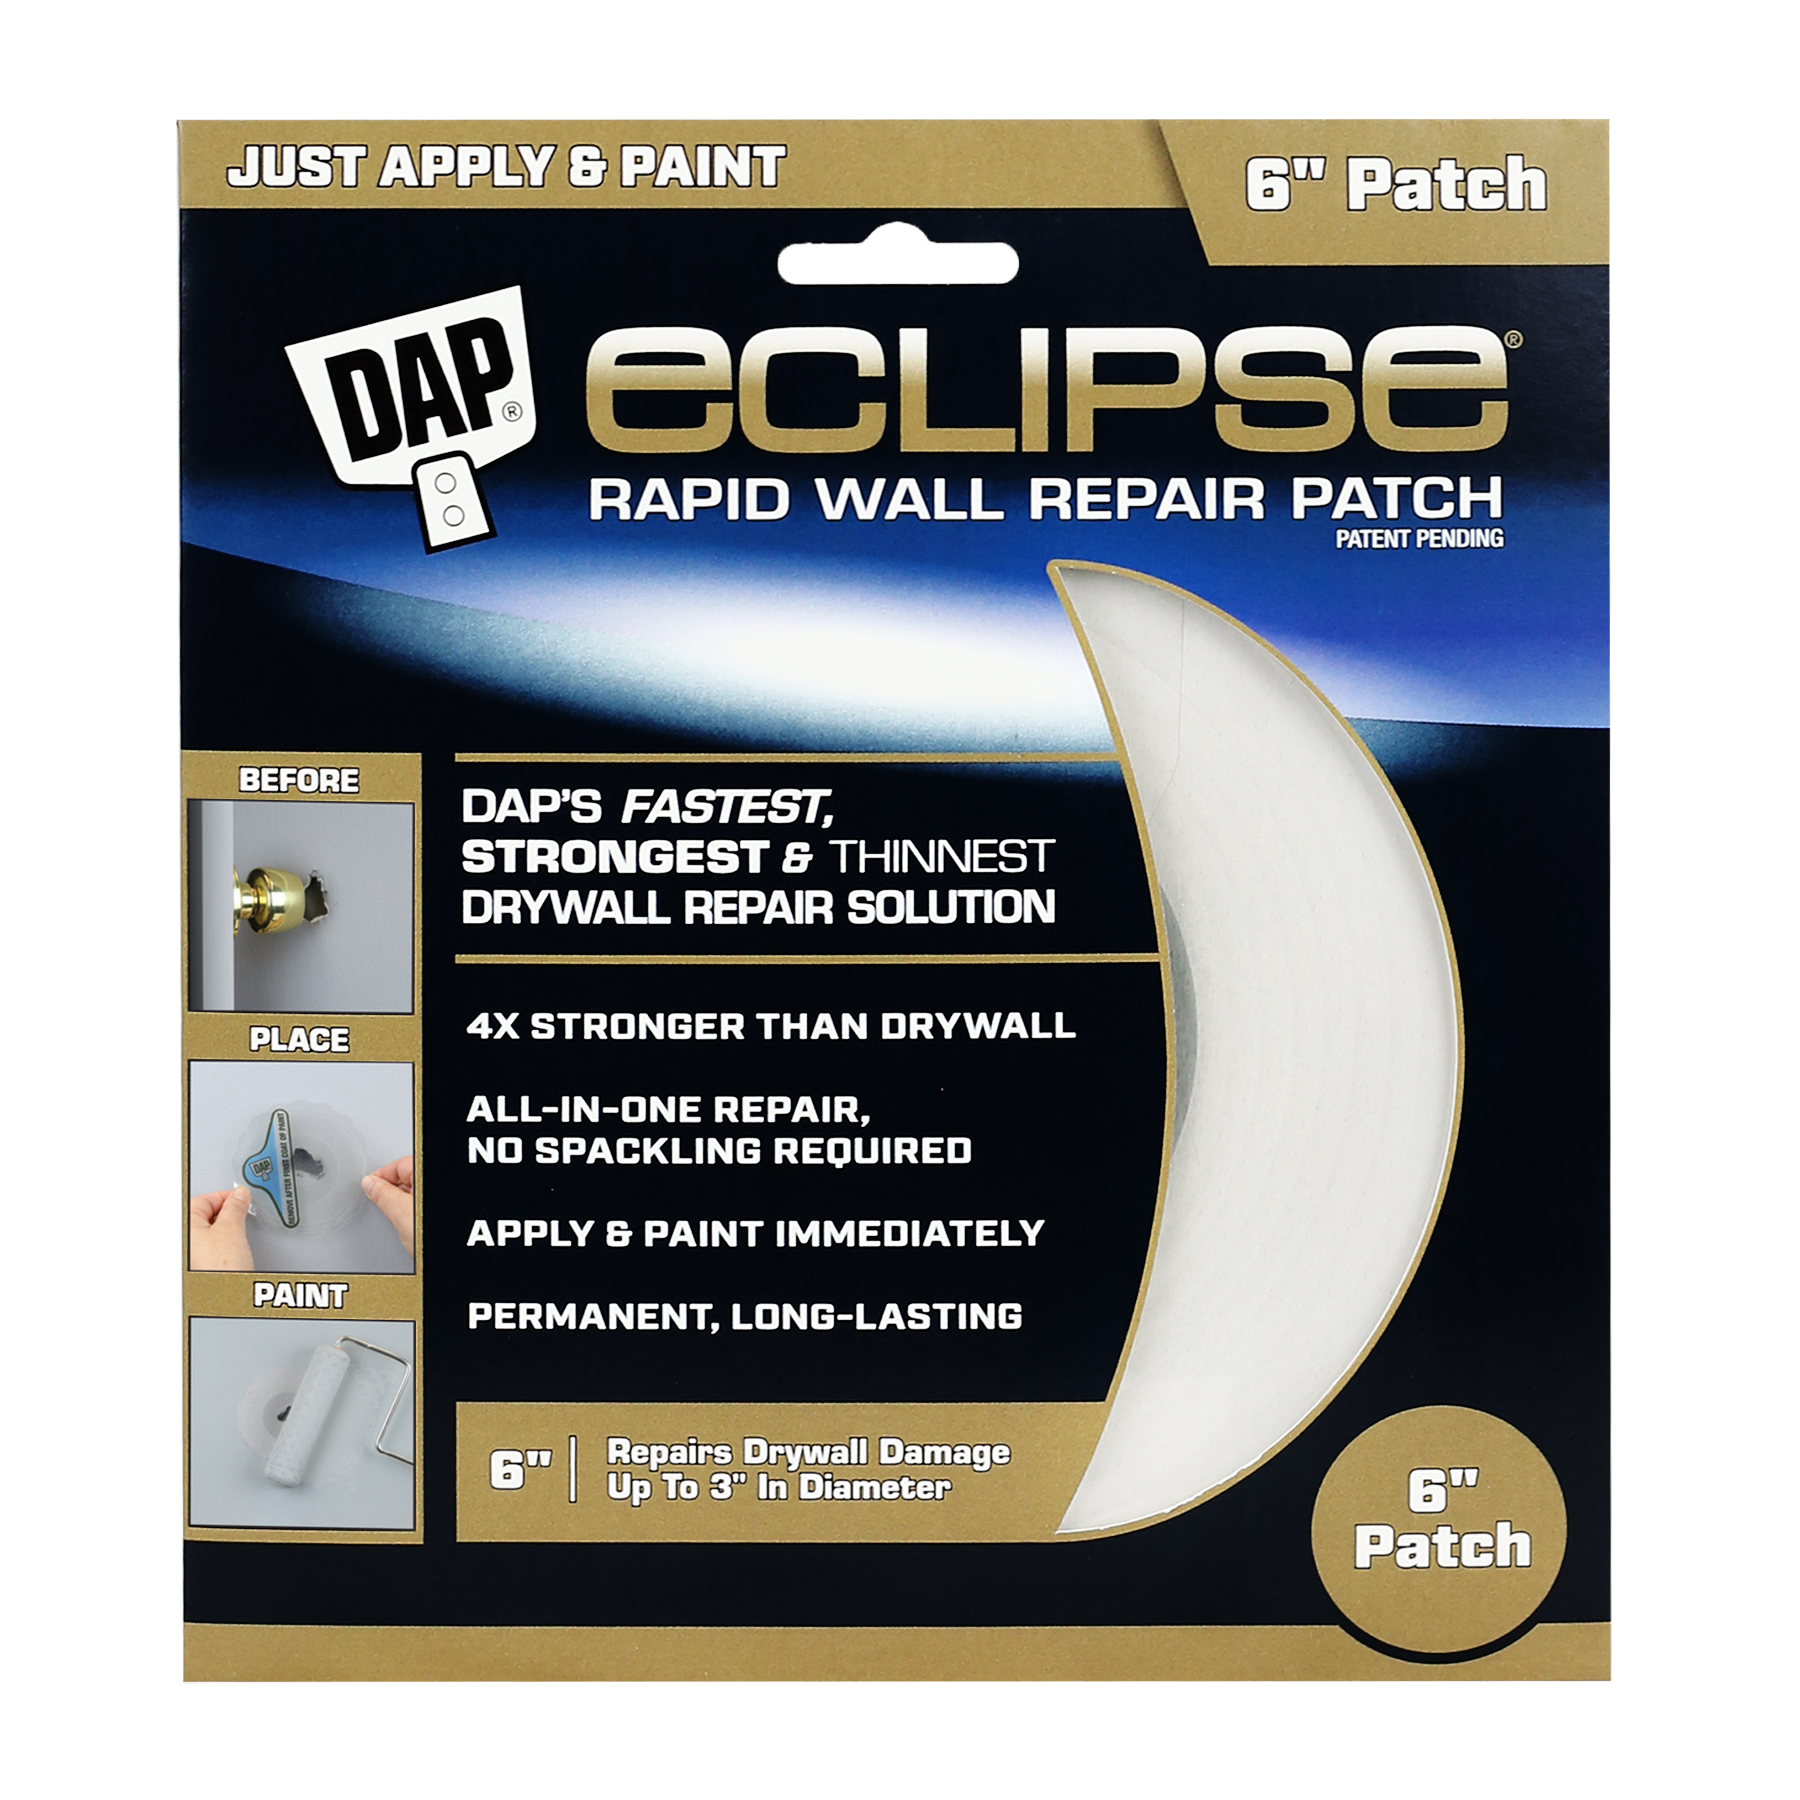 DAP Eclipse Rapid Wall Repair Patch